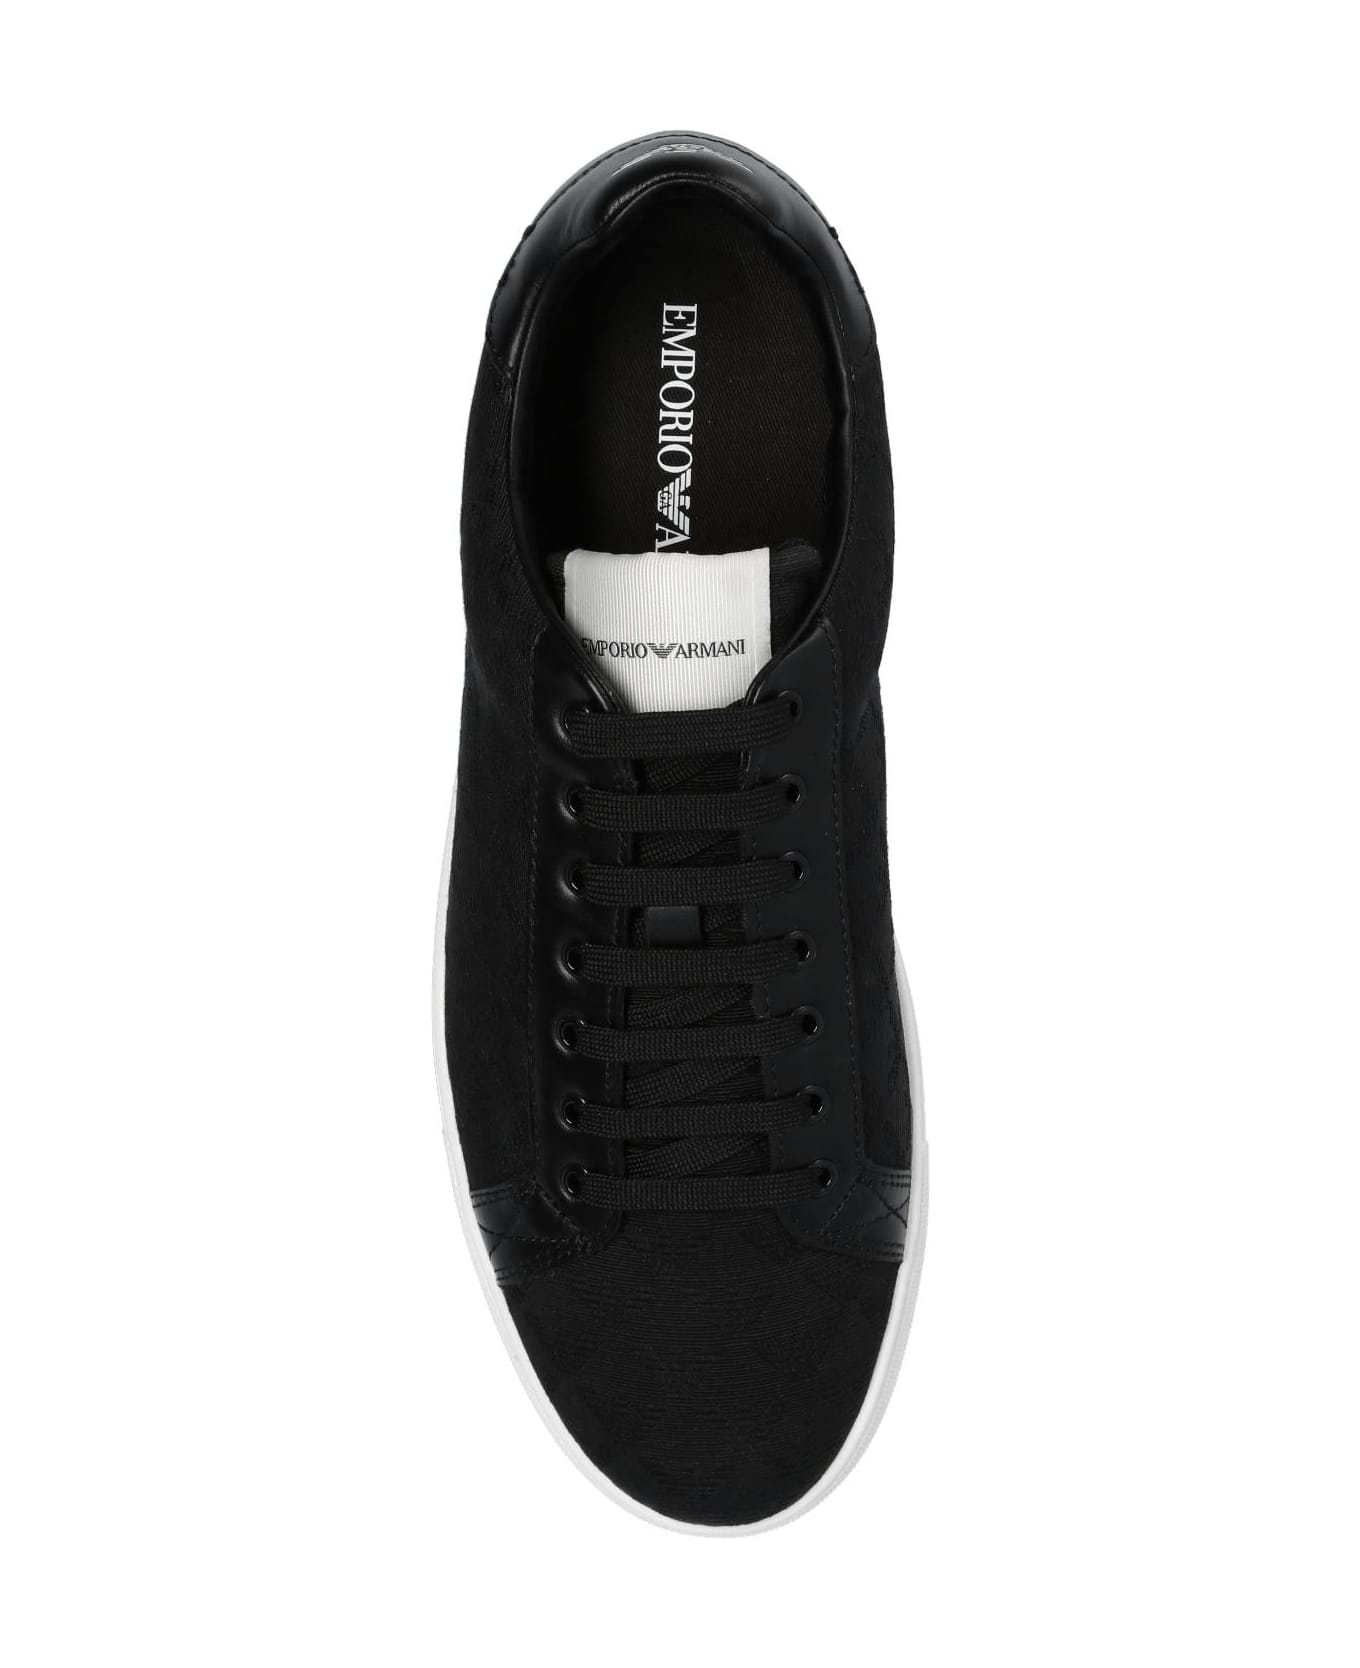 Emporio Armani Sneakers With Logo - Black スニーカー